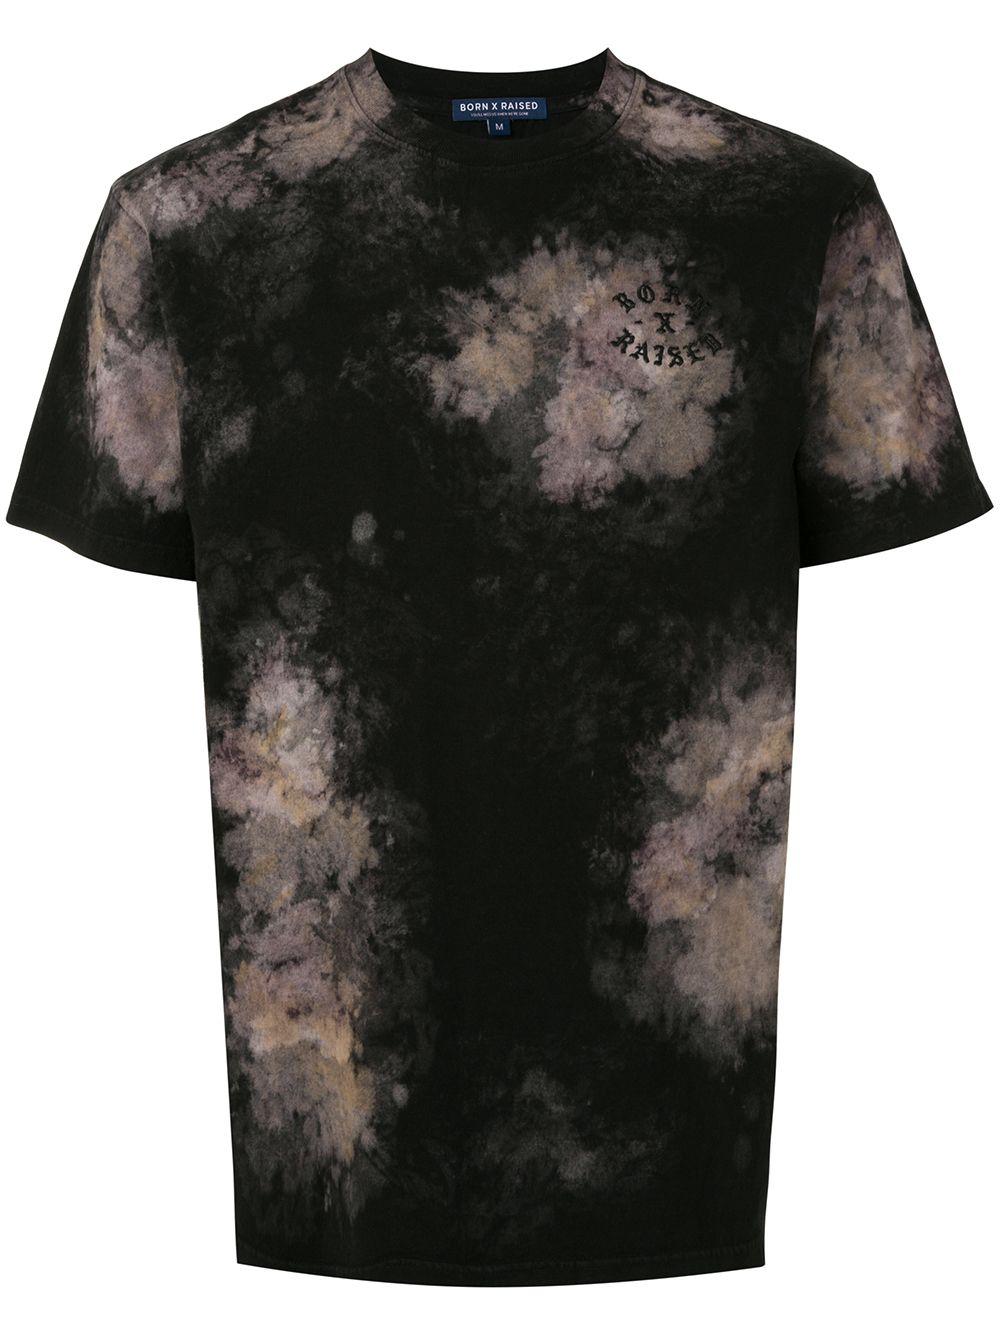 tie-dye print T-shirt by BORNXRAISED